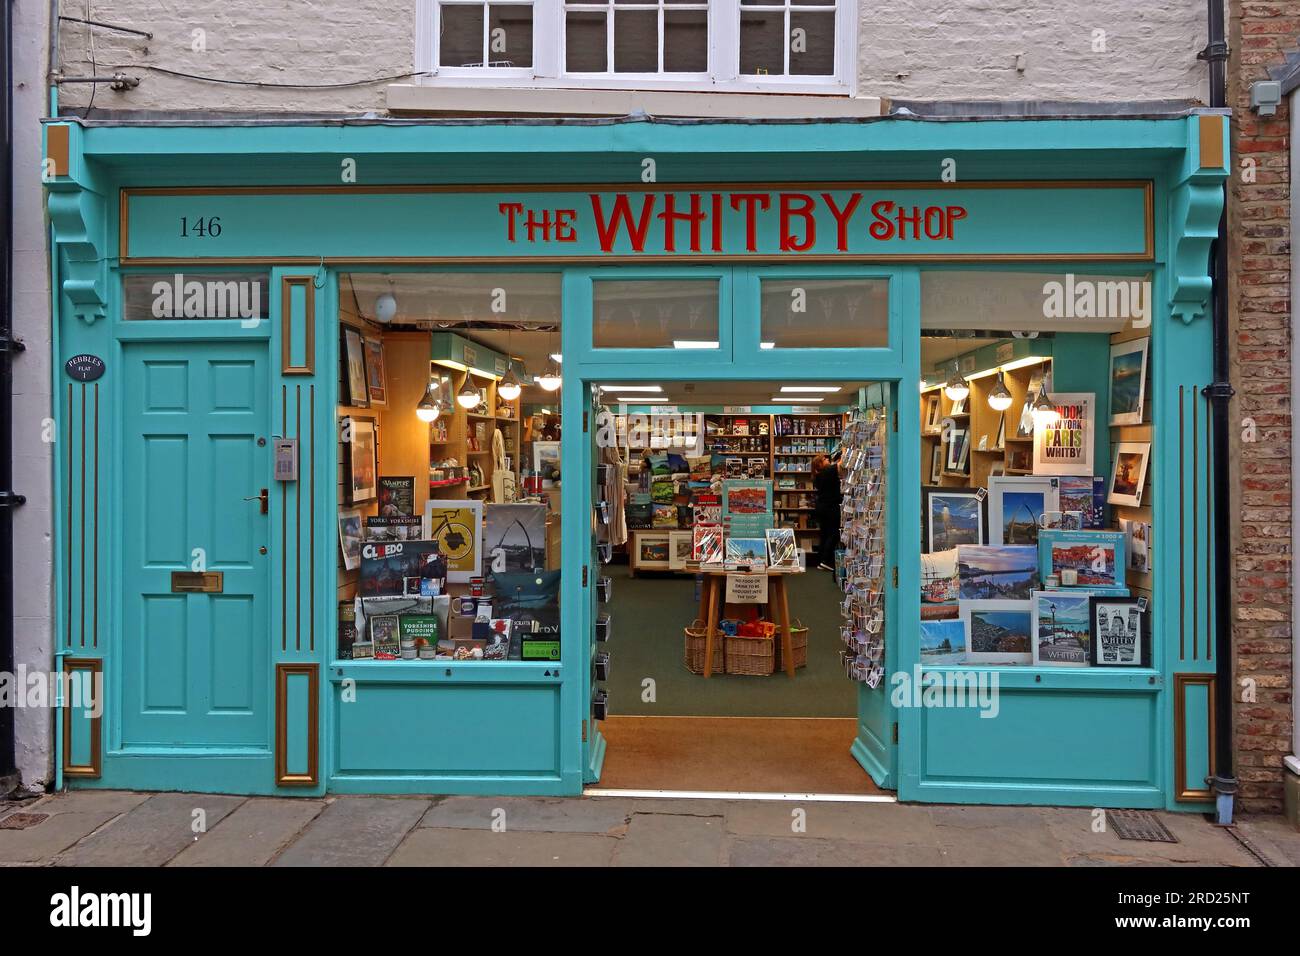 Whitby Touristengeschäfte Buchladen, The Whitby Shop, 146 Church St, Whitby, North Yorkshire, Yorkshire, England, Großbritannien, YO22 4DE Stockfoto